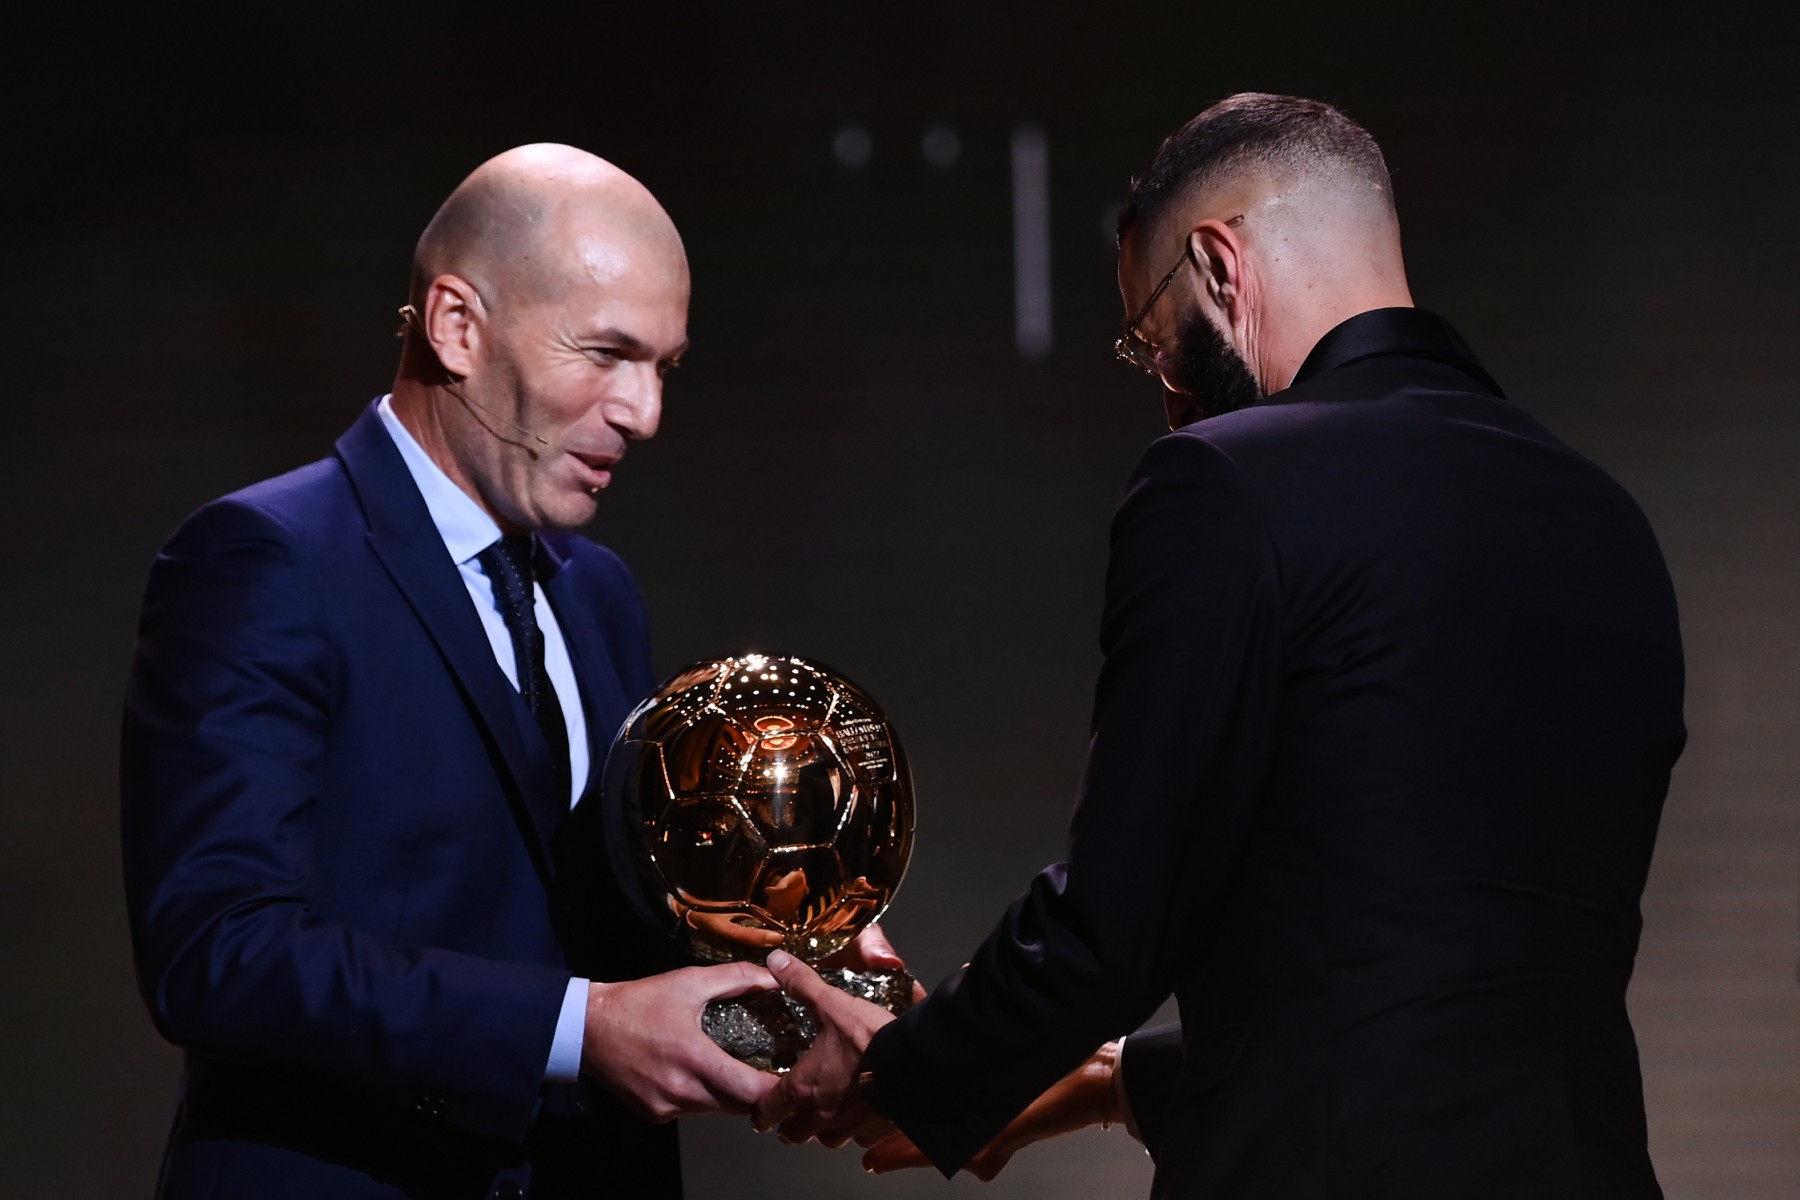 Karim Benzema Ballon d'or: «C'est un rêve de gamin», confie l